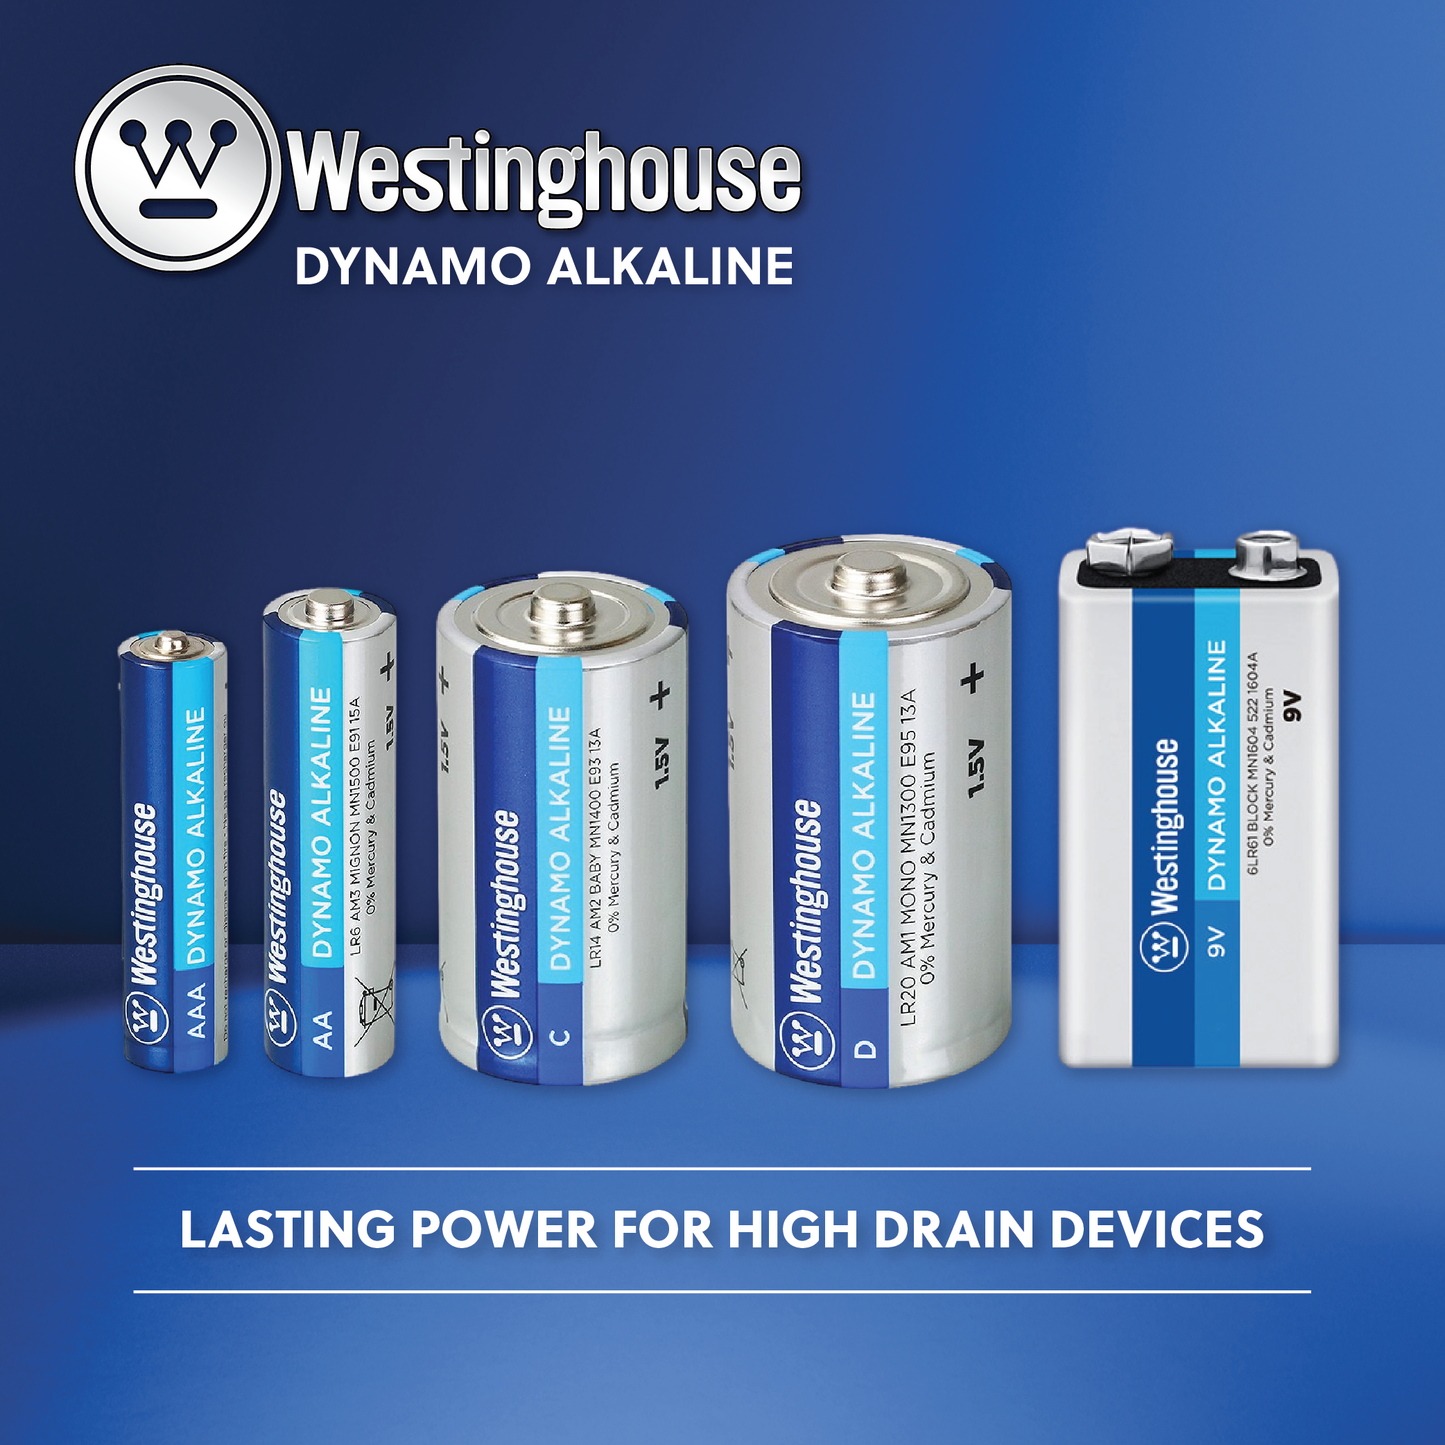 Westinghouse AAA Dynamo Alkaline Batteries Hard Plastic Pack of 48